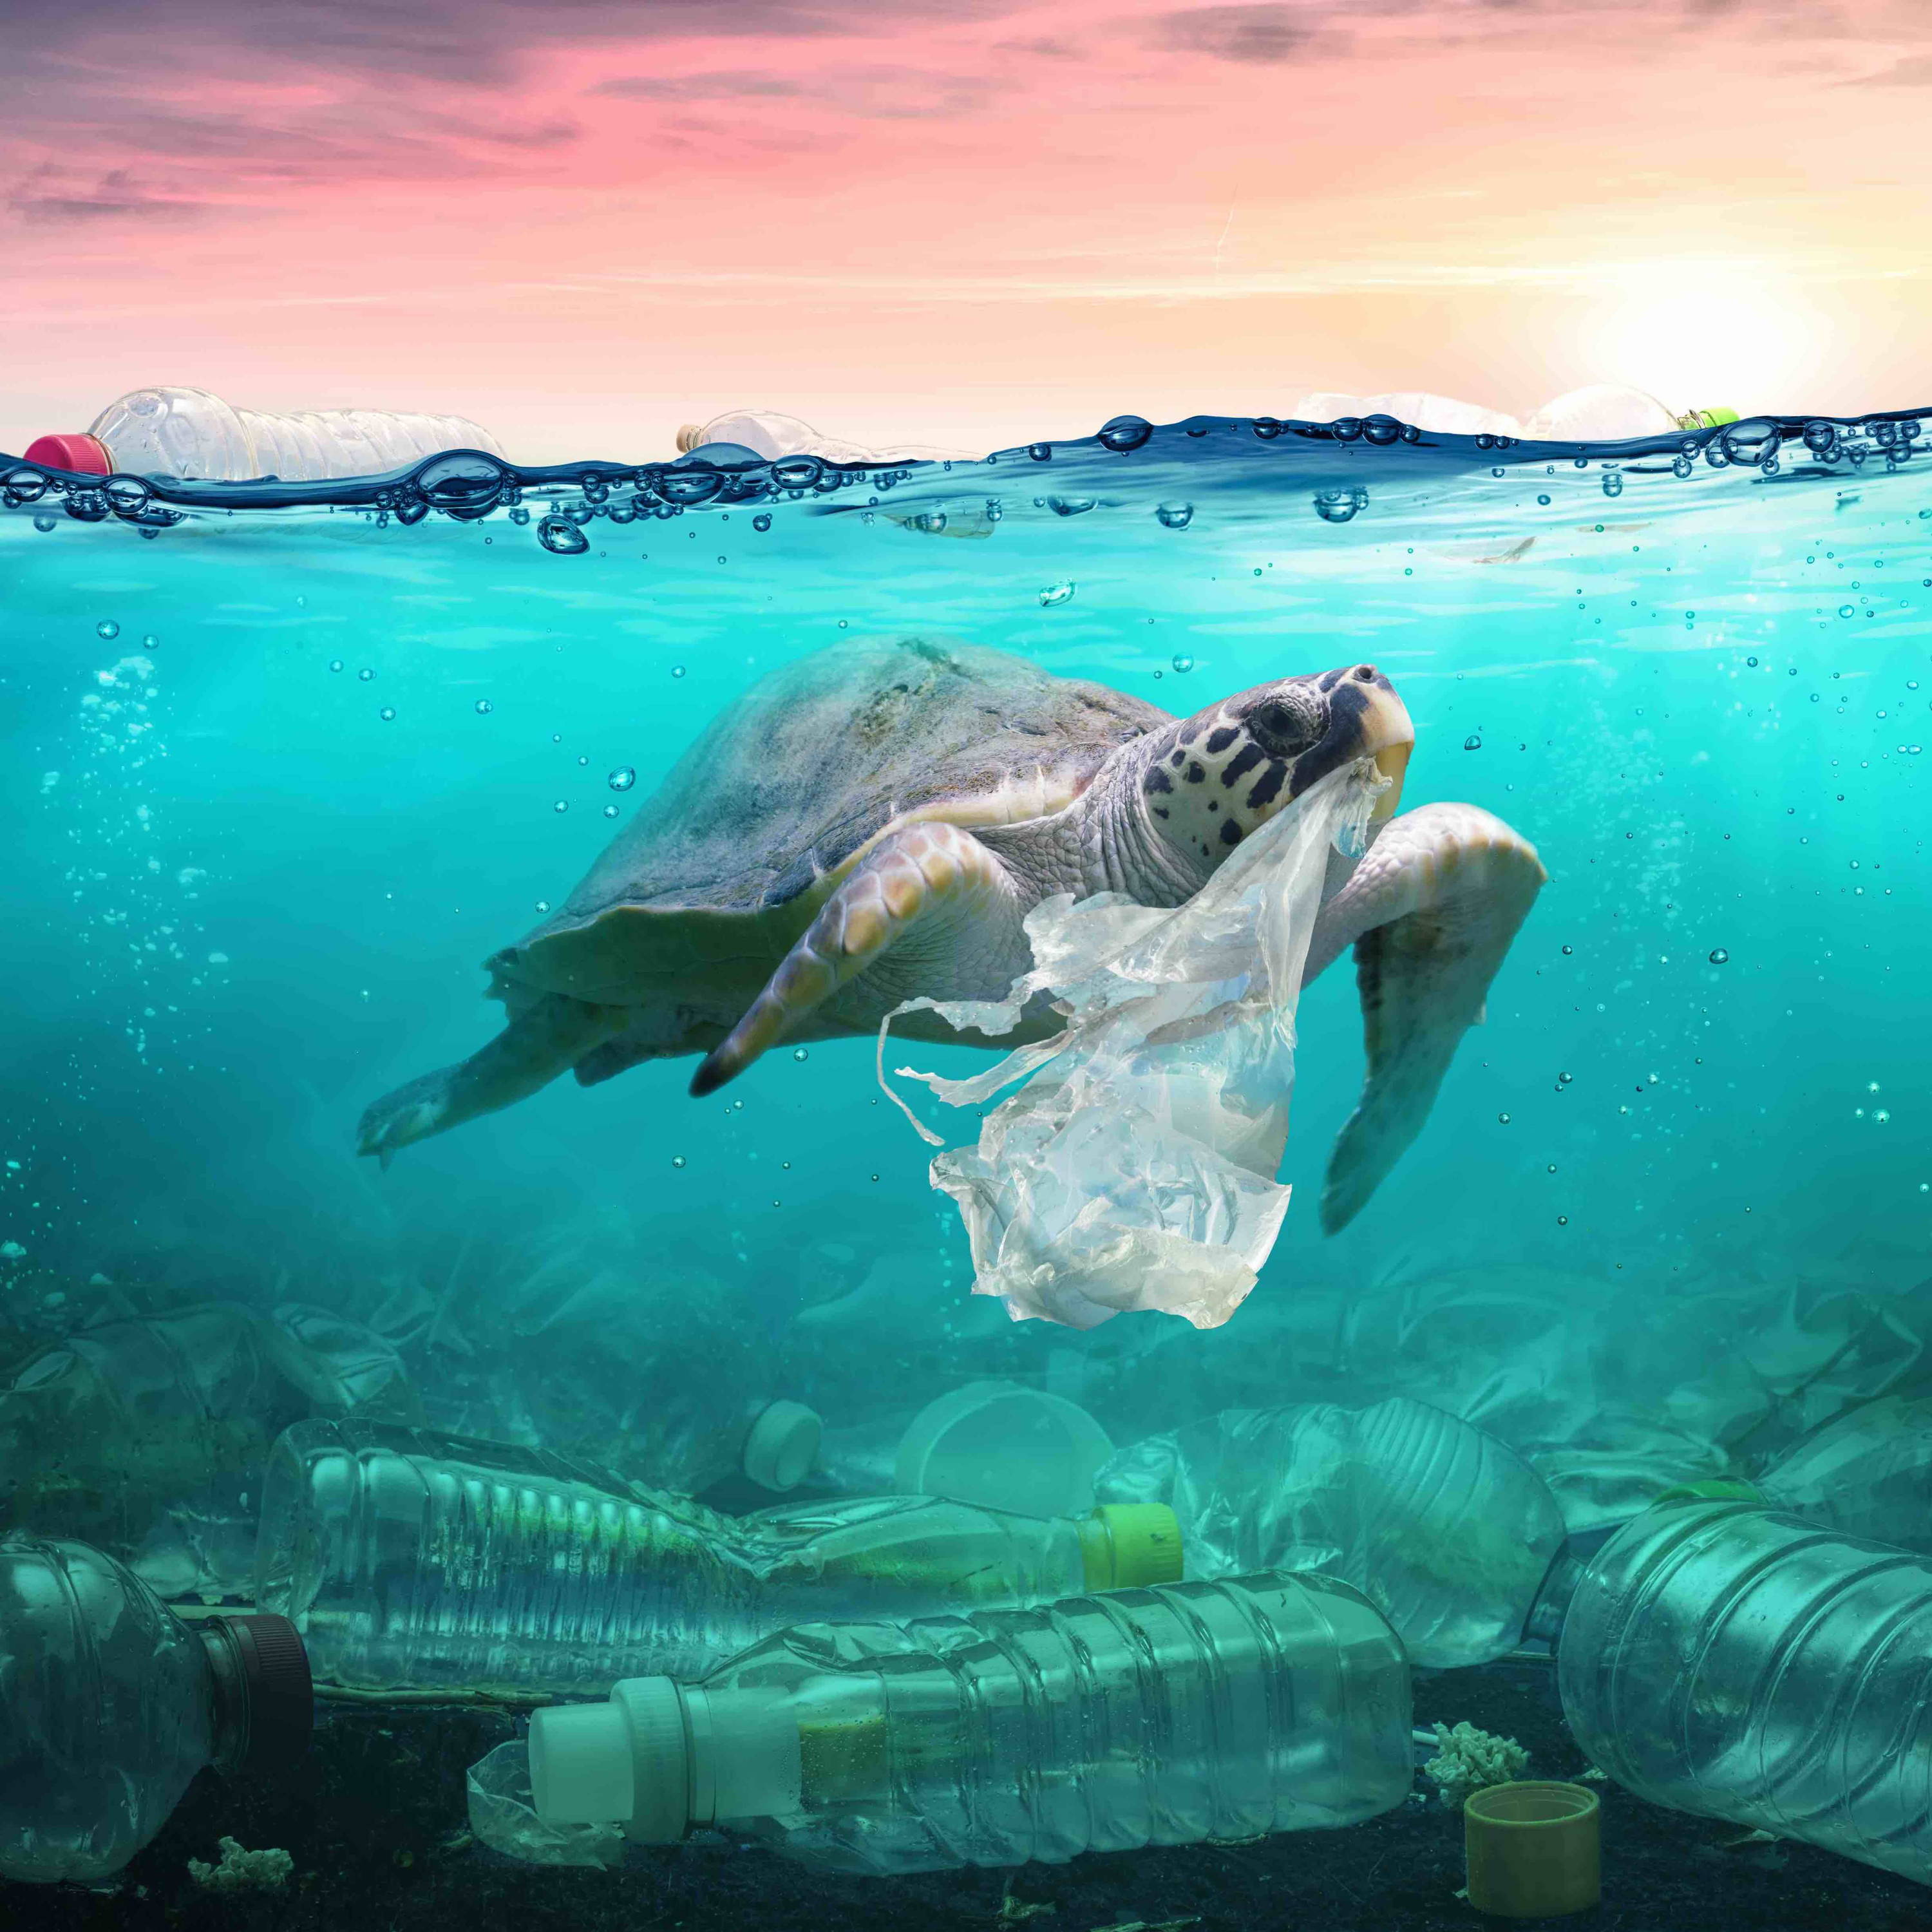 Turtle in ocean with plastic bag